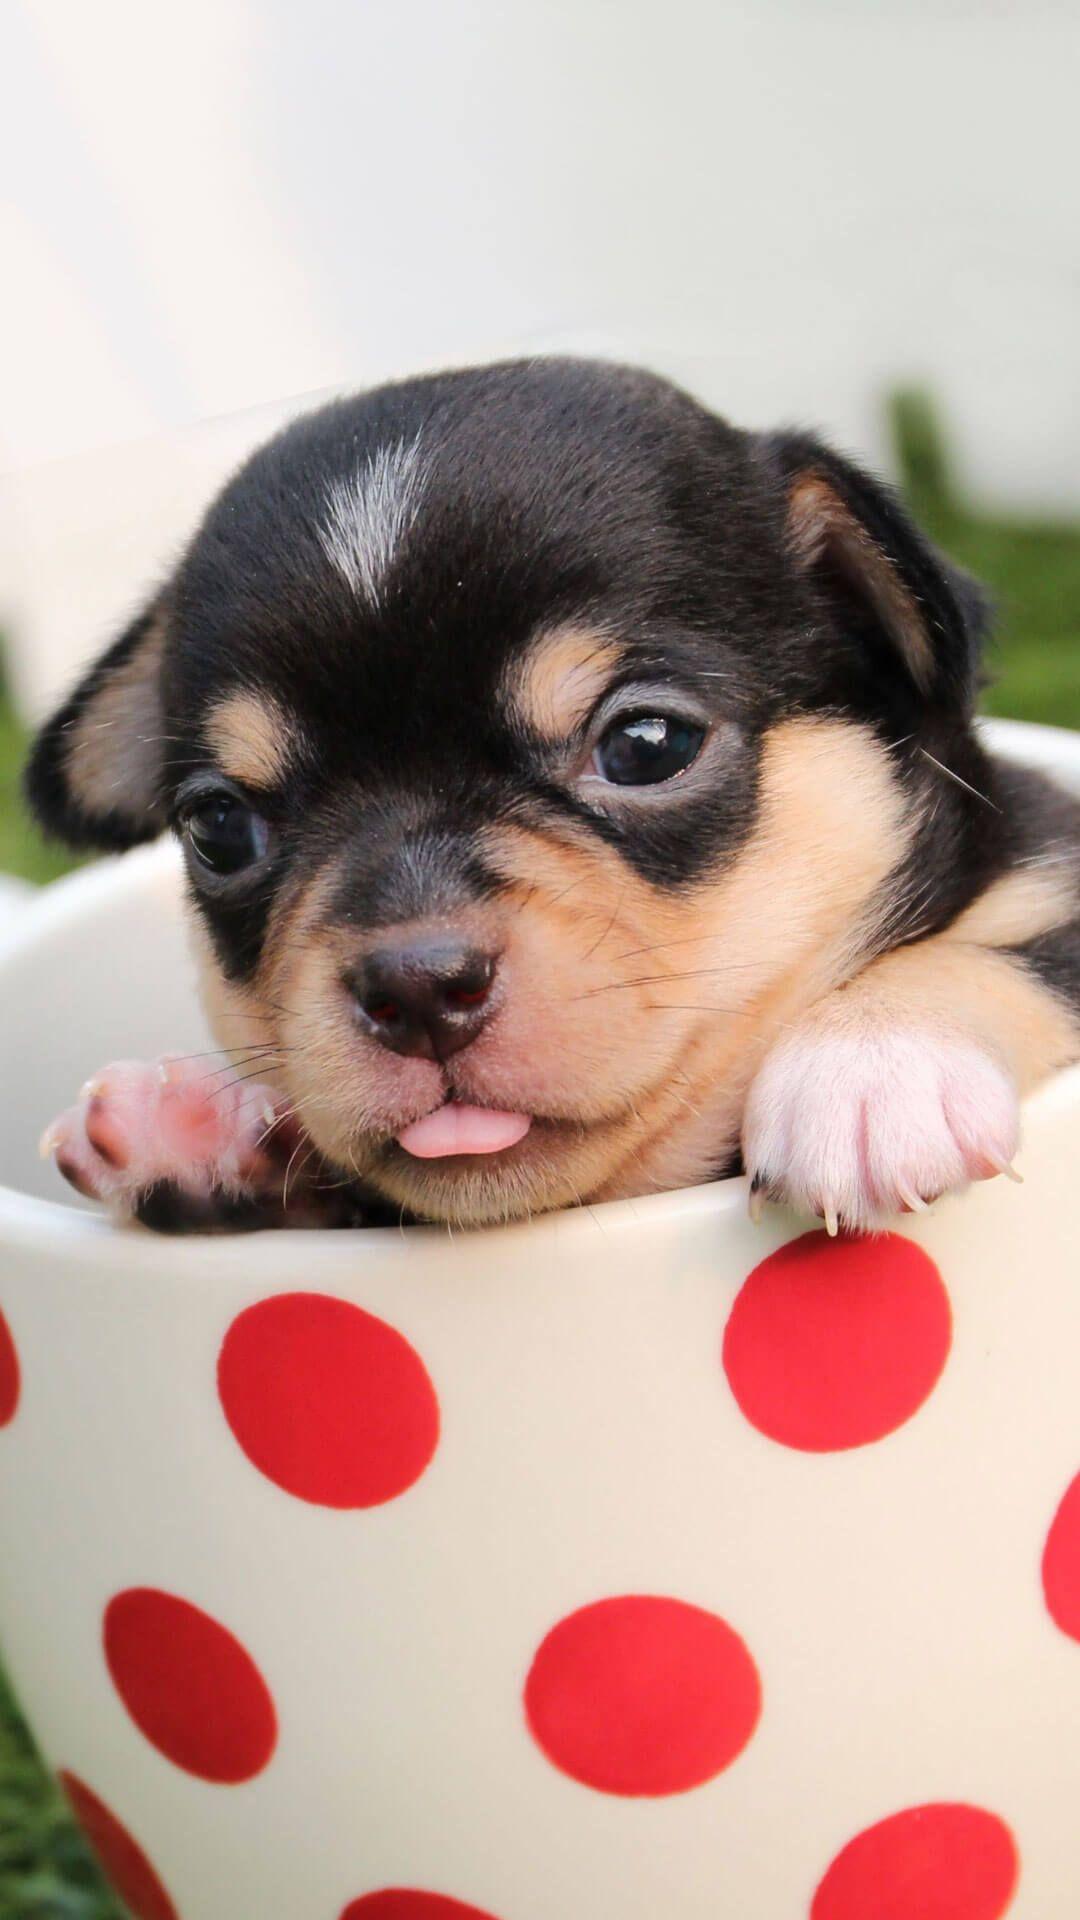 Cute Puppies iPhone 6 Wallpaper HD. Cute puppies, Cute puppy